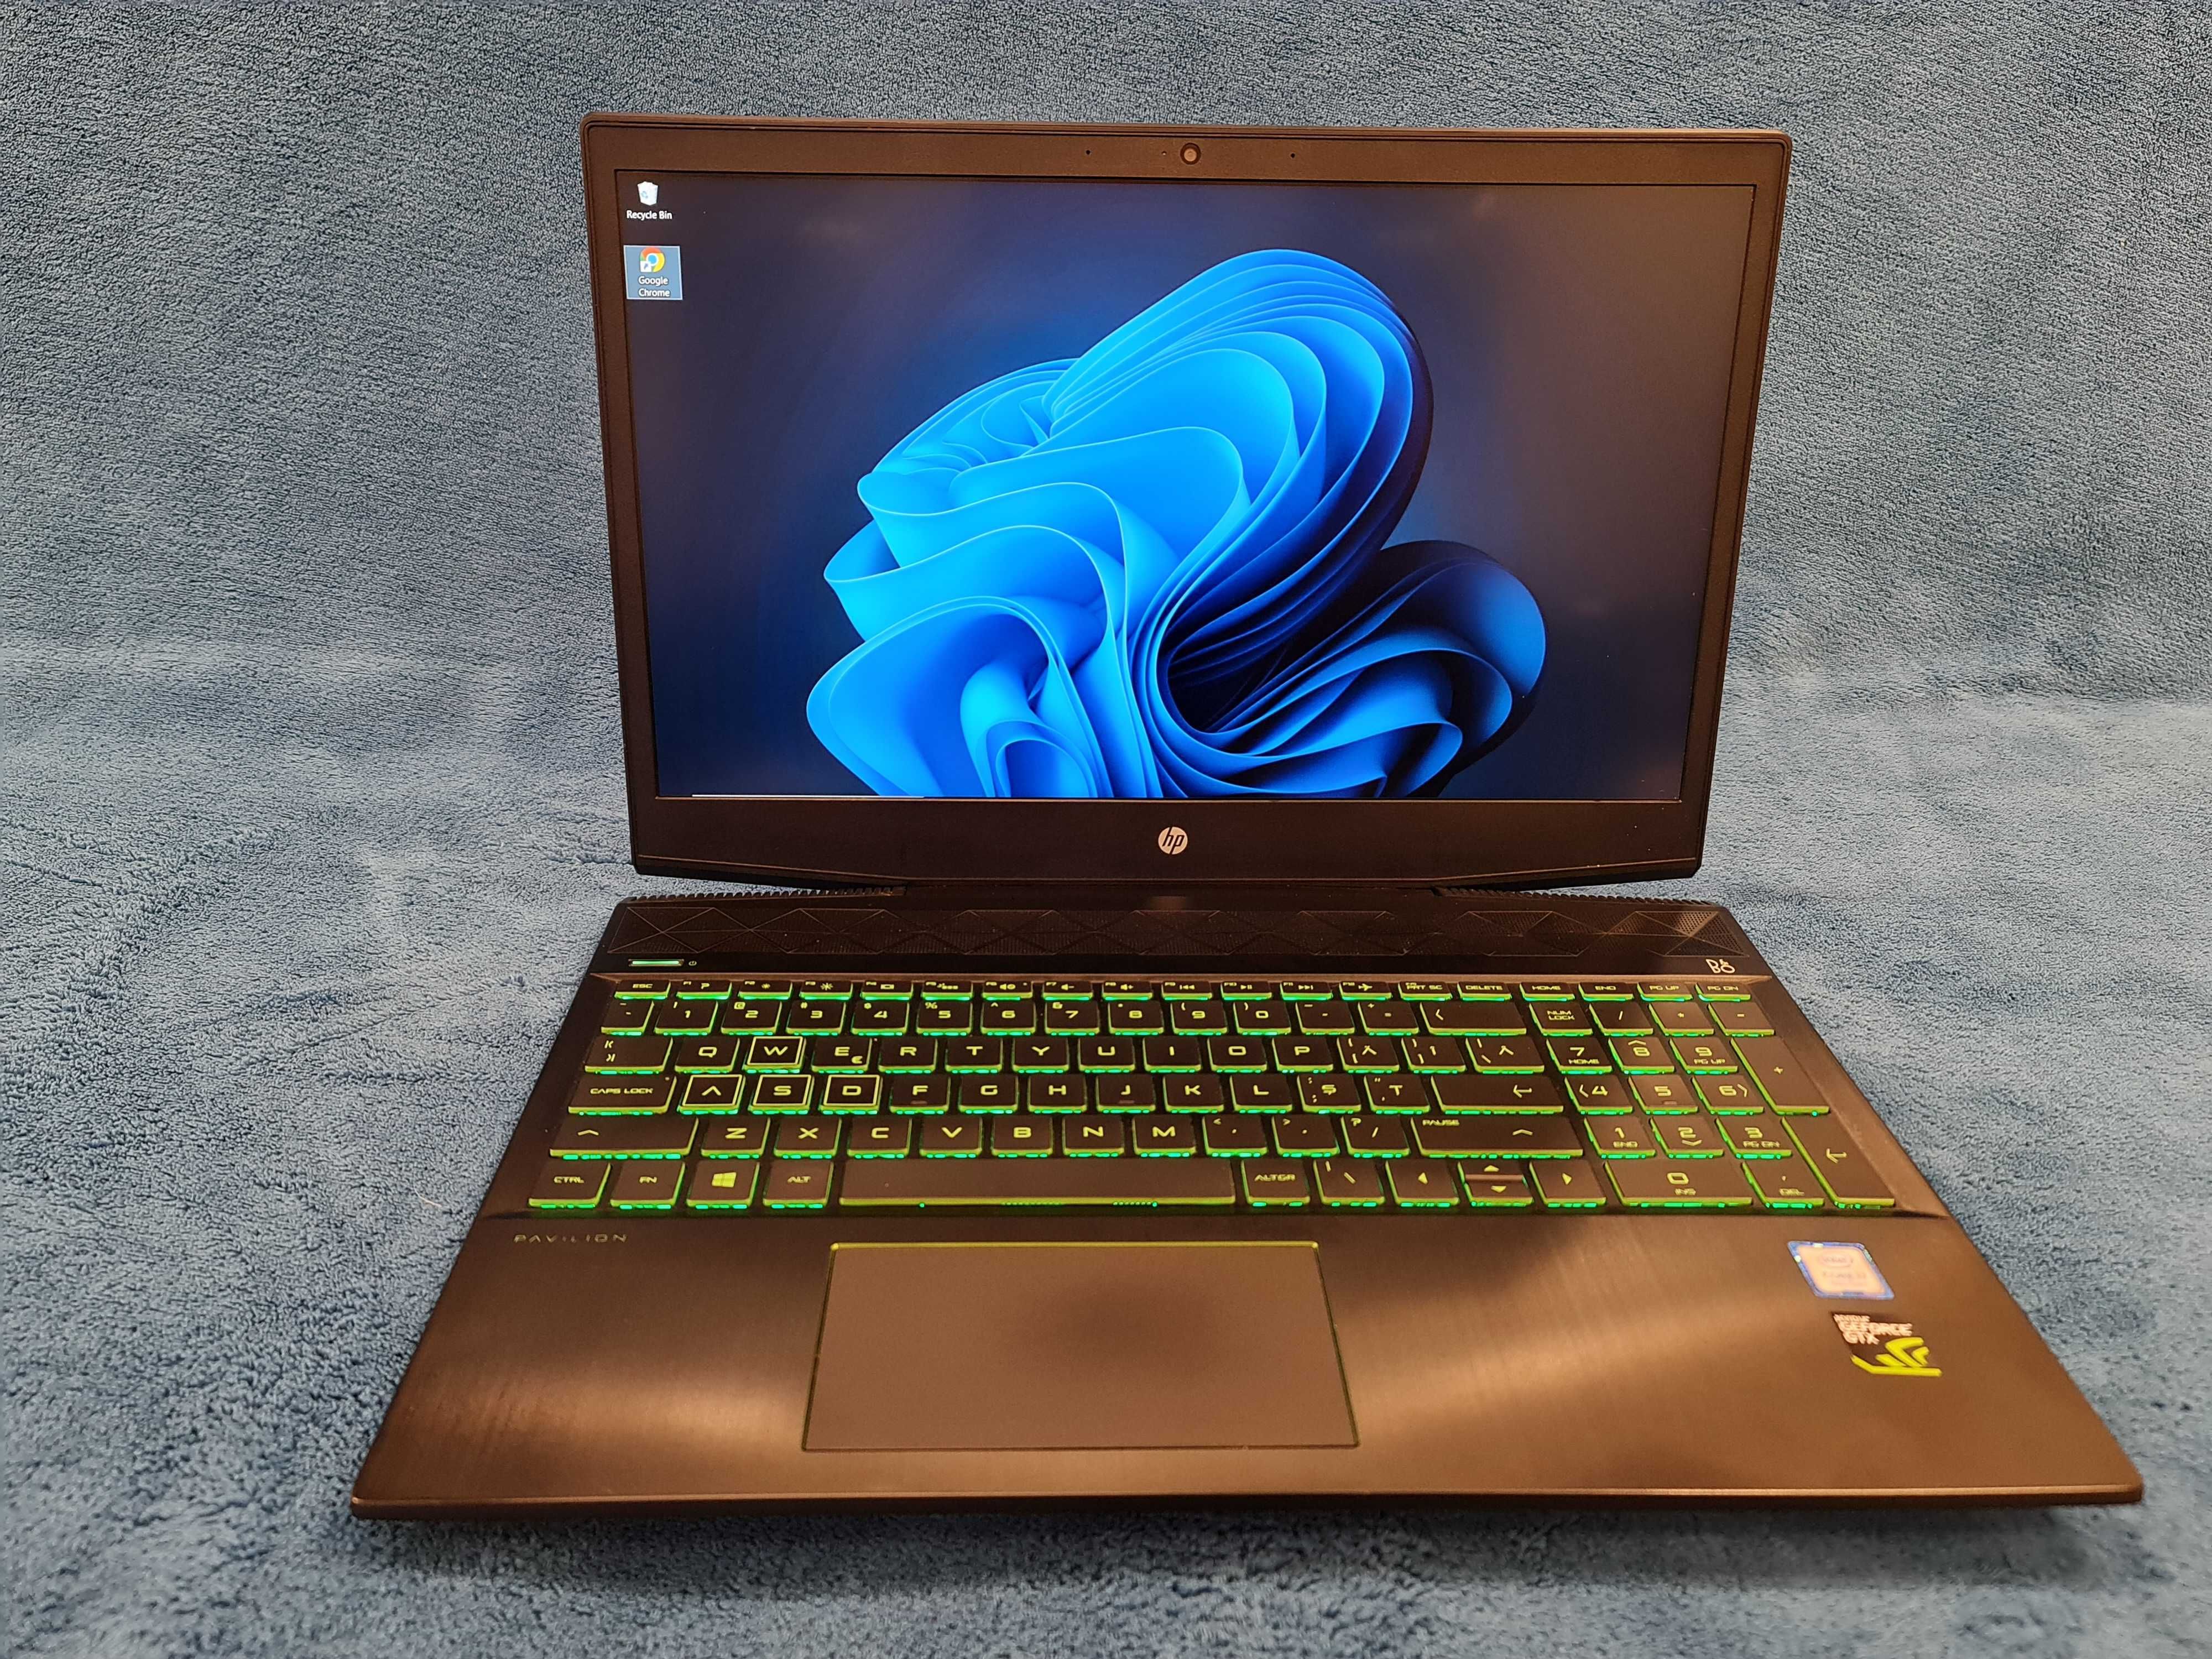 Laptop gaming nou HP, intel core- i7-8750H ,(hexa core) video NVIDIA